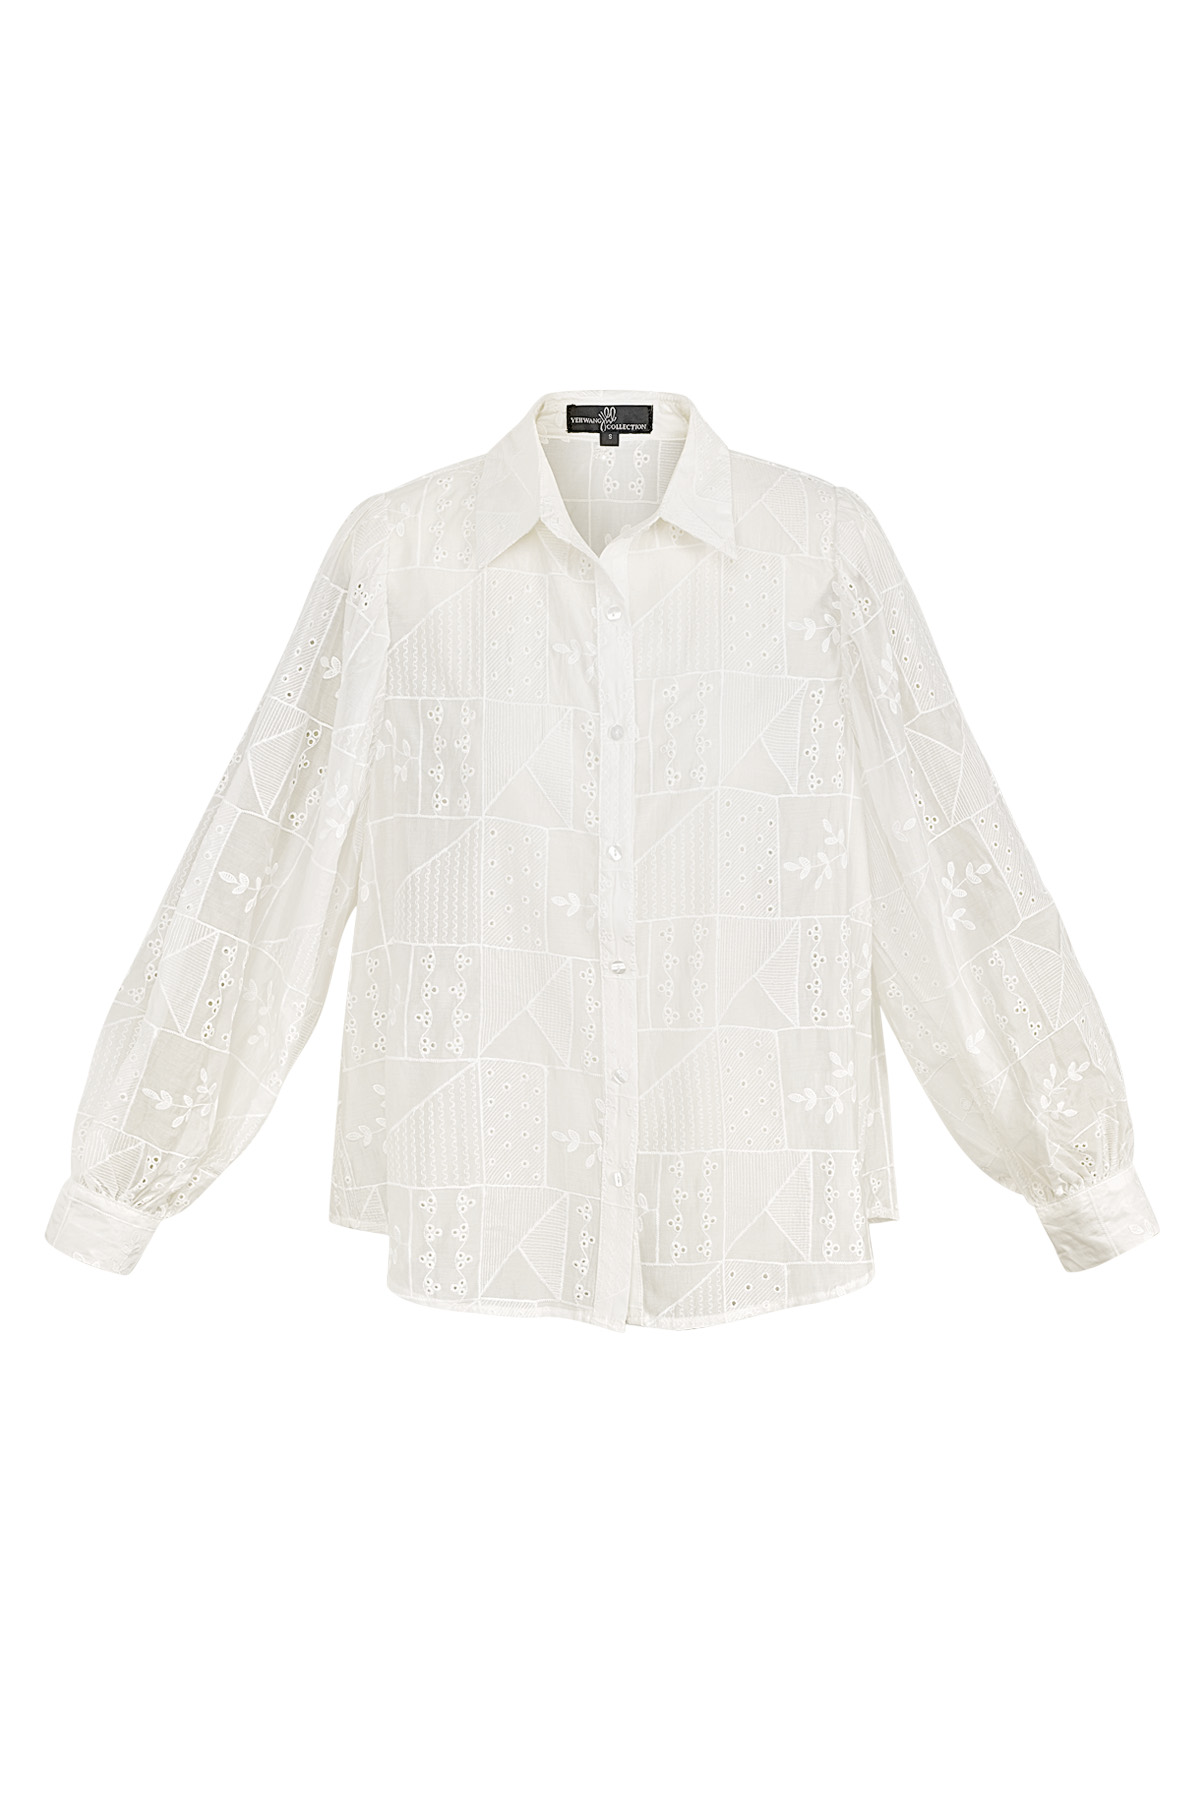 Blusa blanca estampada bordada